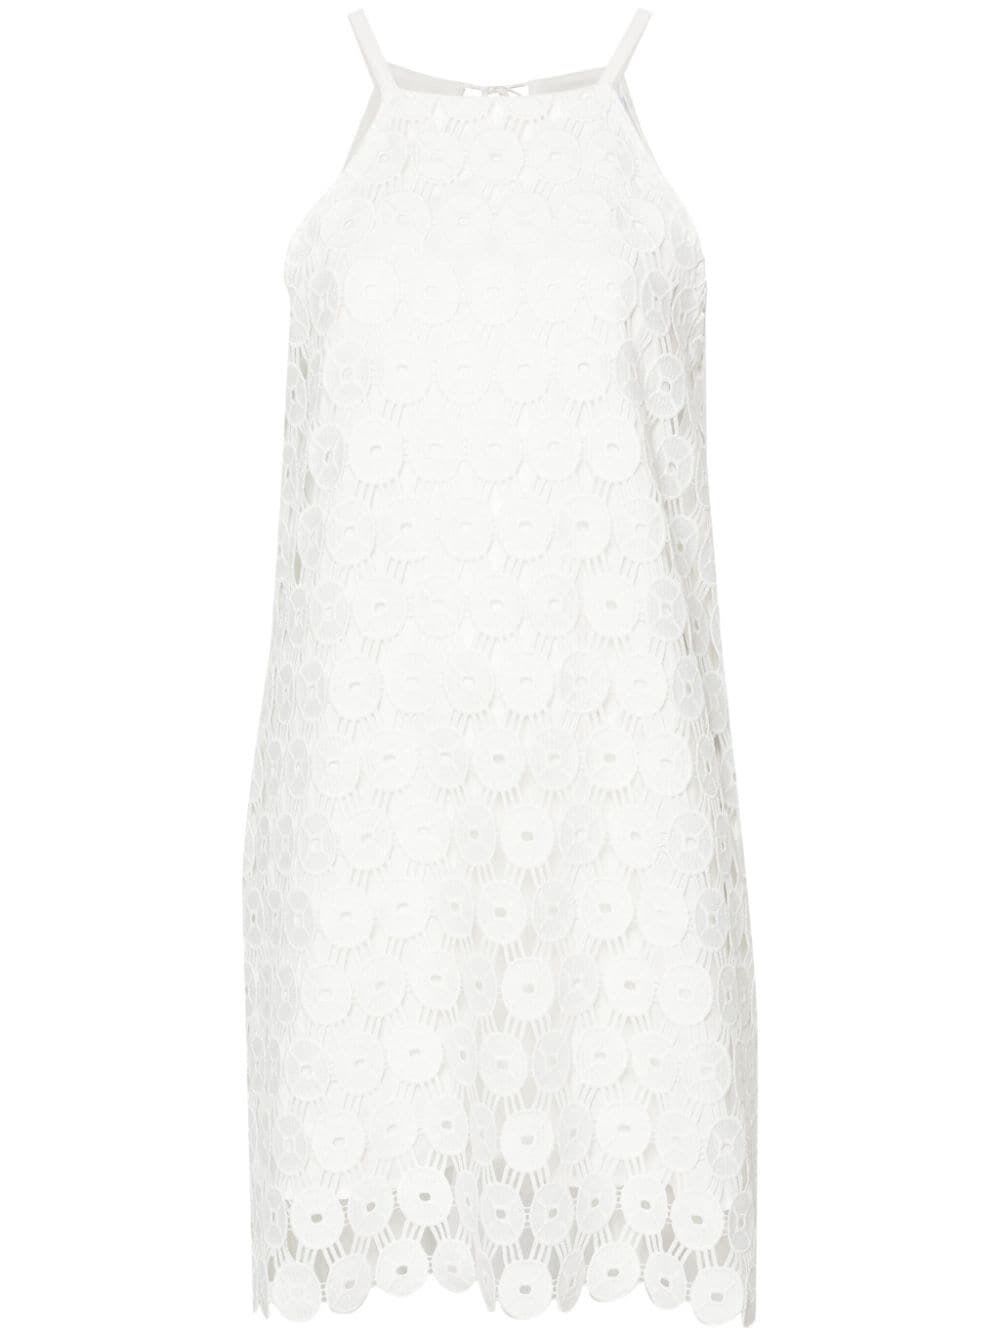 Erika Cavallini Femke Dress In White